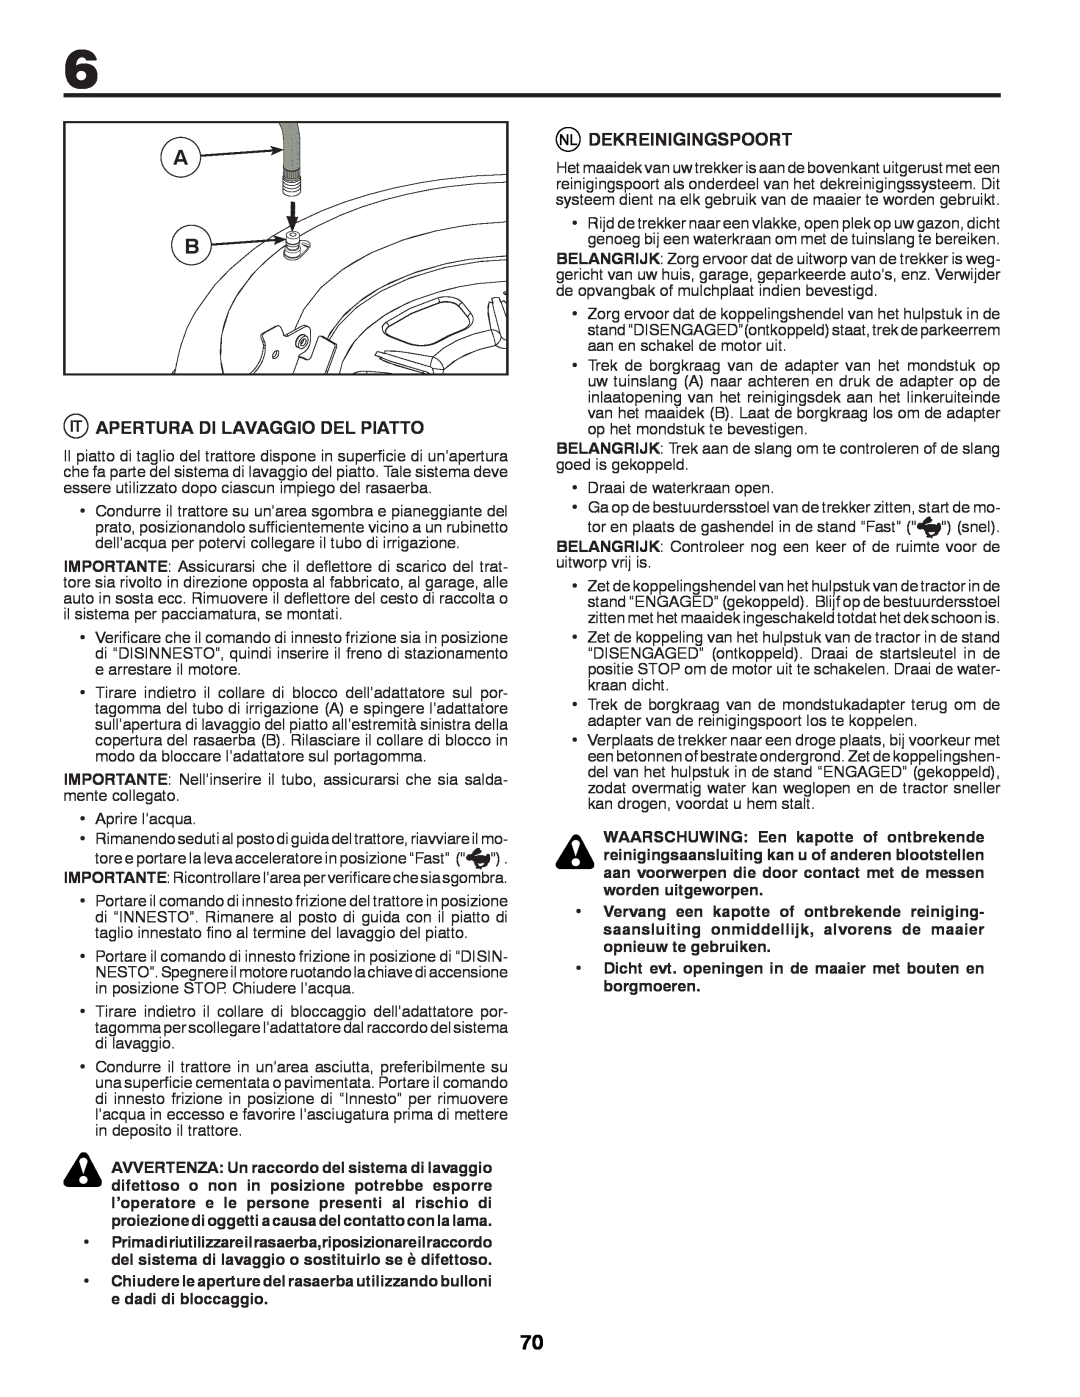 Partner Tech P11577 instruction manual Dekreinigingspoort, Apertura Di Lavaggio Del Piatto 